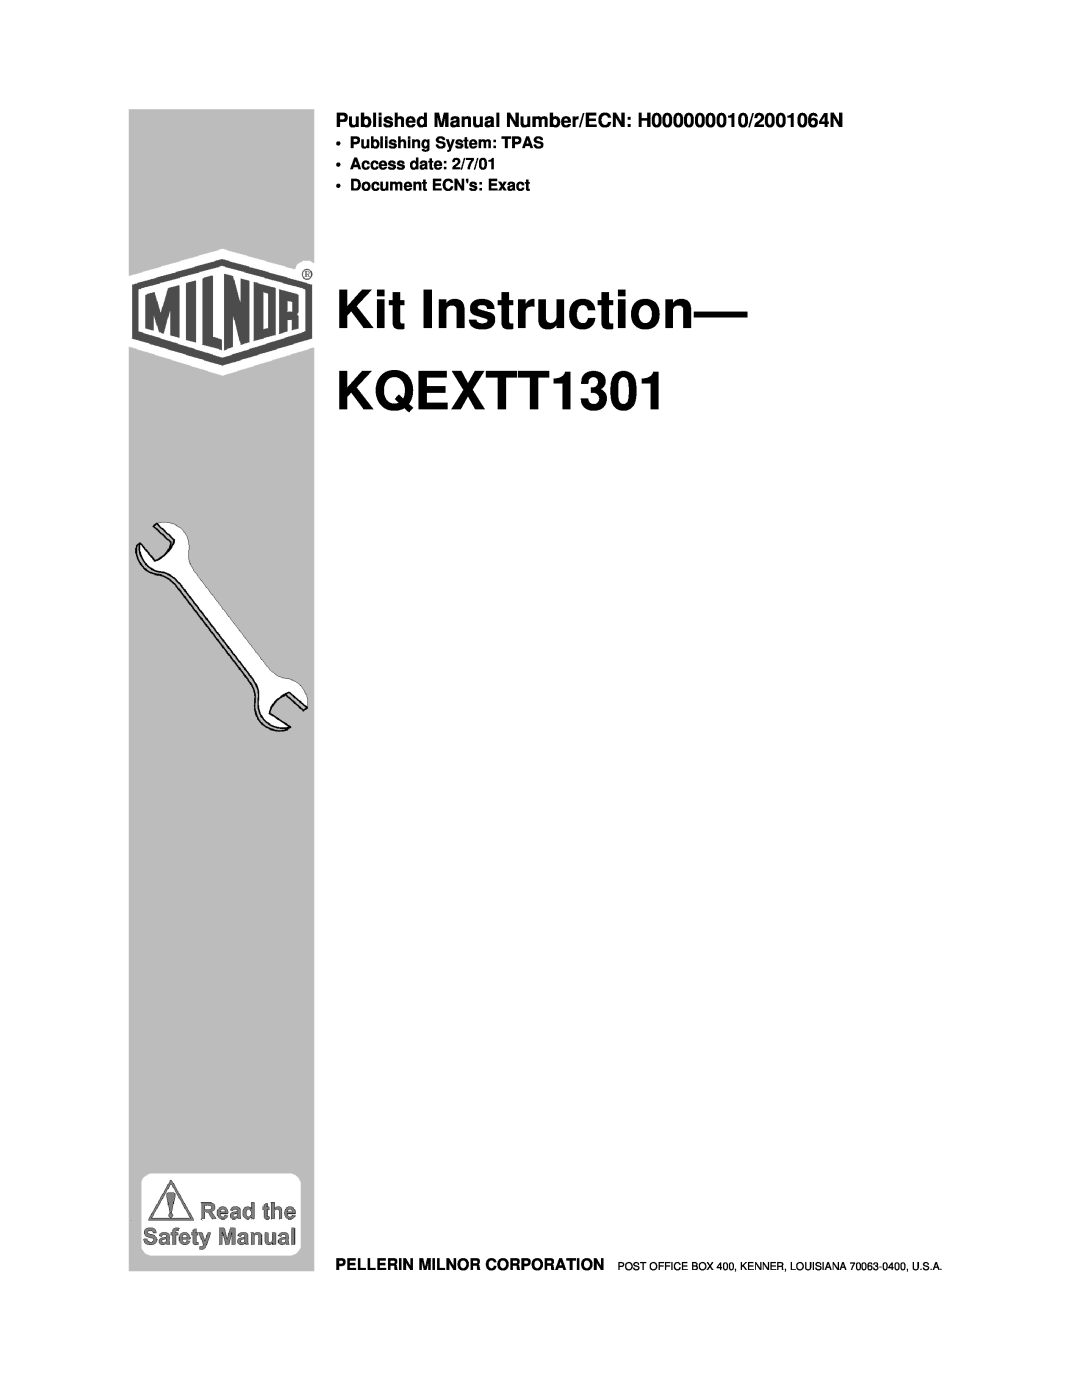 Milnor manual Kit Instruction- KQEXTT1301, Published Manual Number/ECN H000000010/2001064N, Document ECNs Exact 